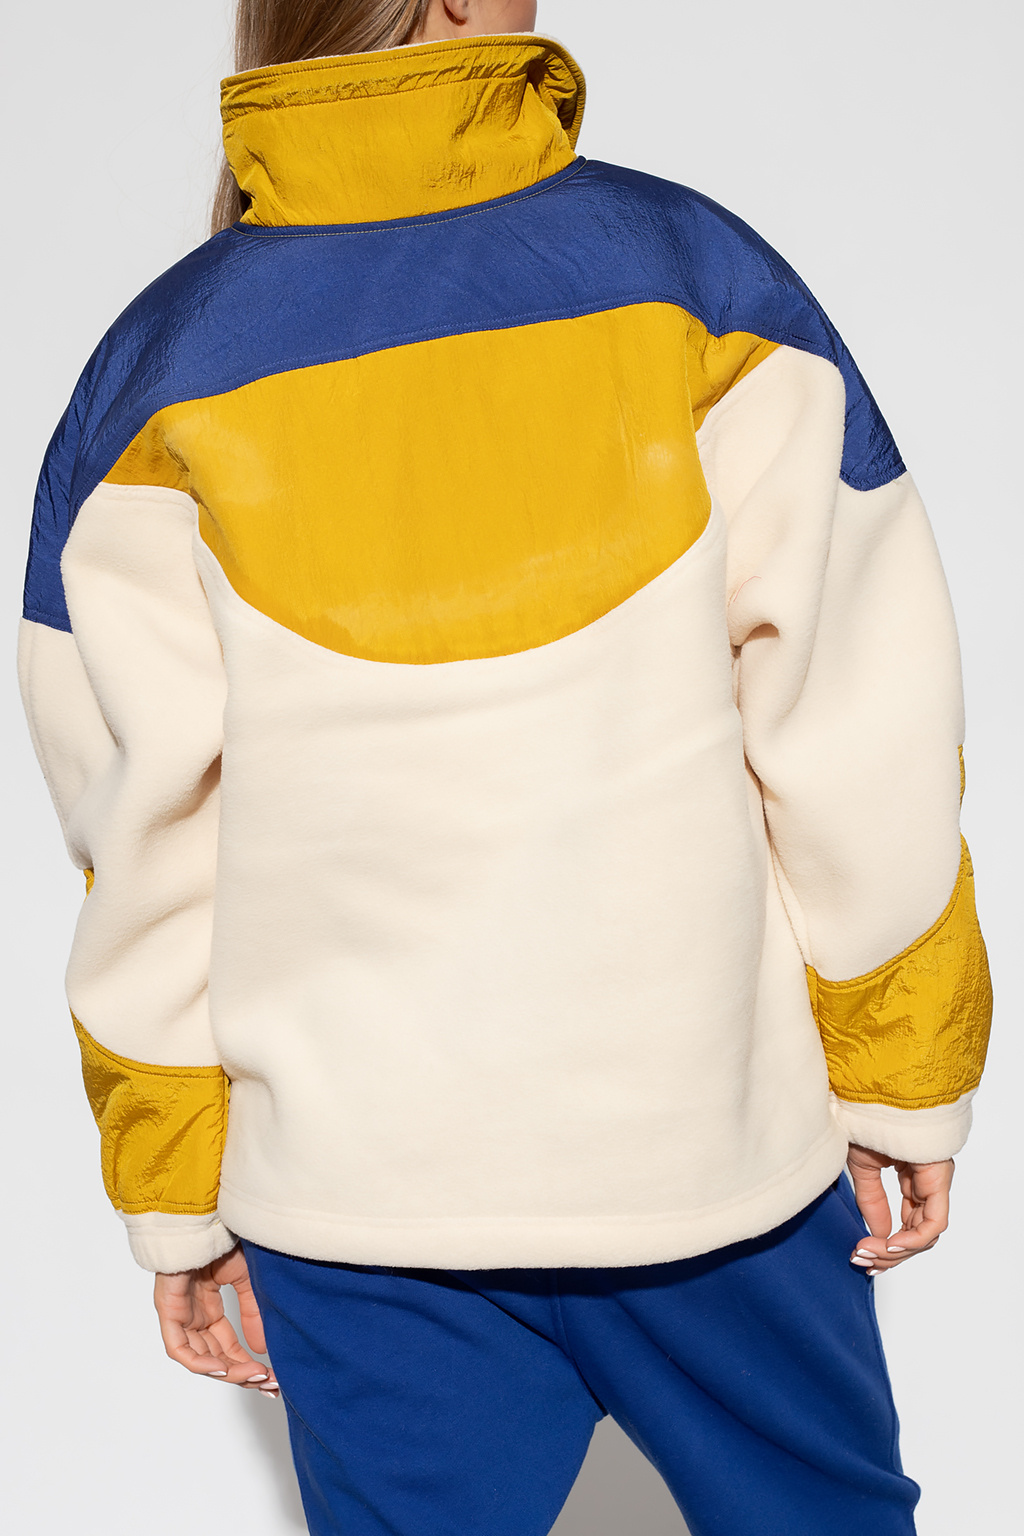 blumarine braided trim tweed jacket item ‘Mantsyni’ fleece sweatshirt